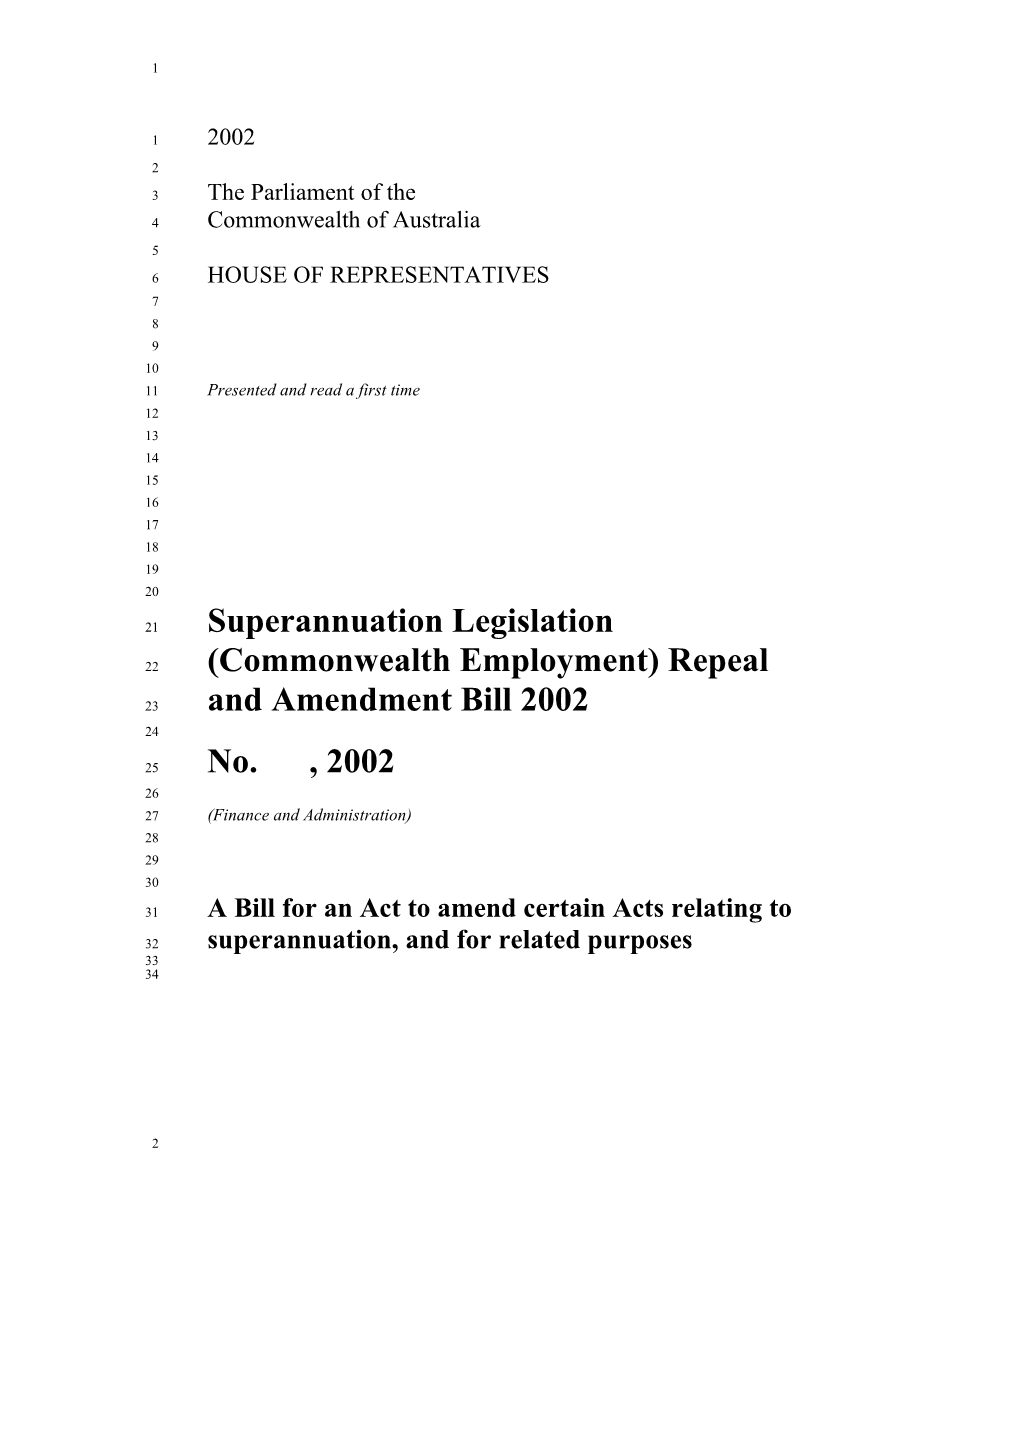 Superannuation Legislation (Commonwealth Employment) Repeal and Amendment Bill 2002